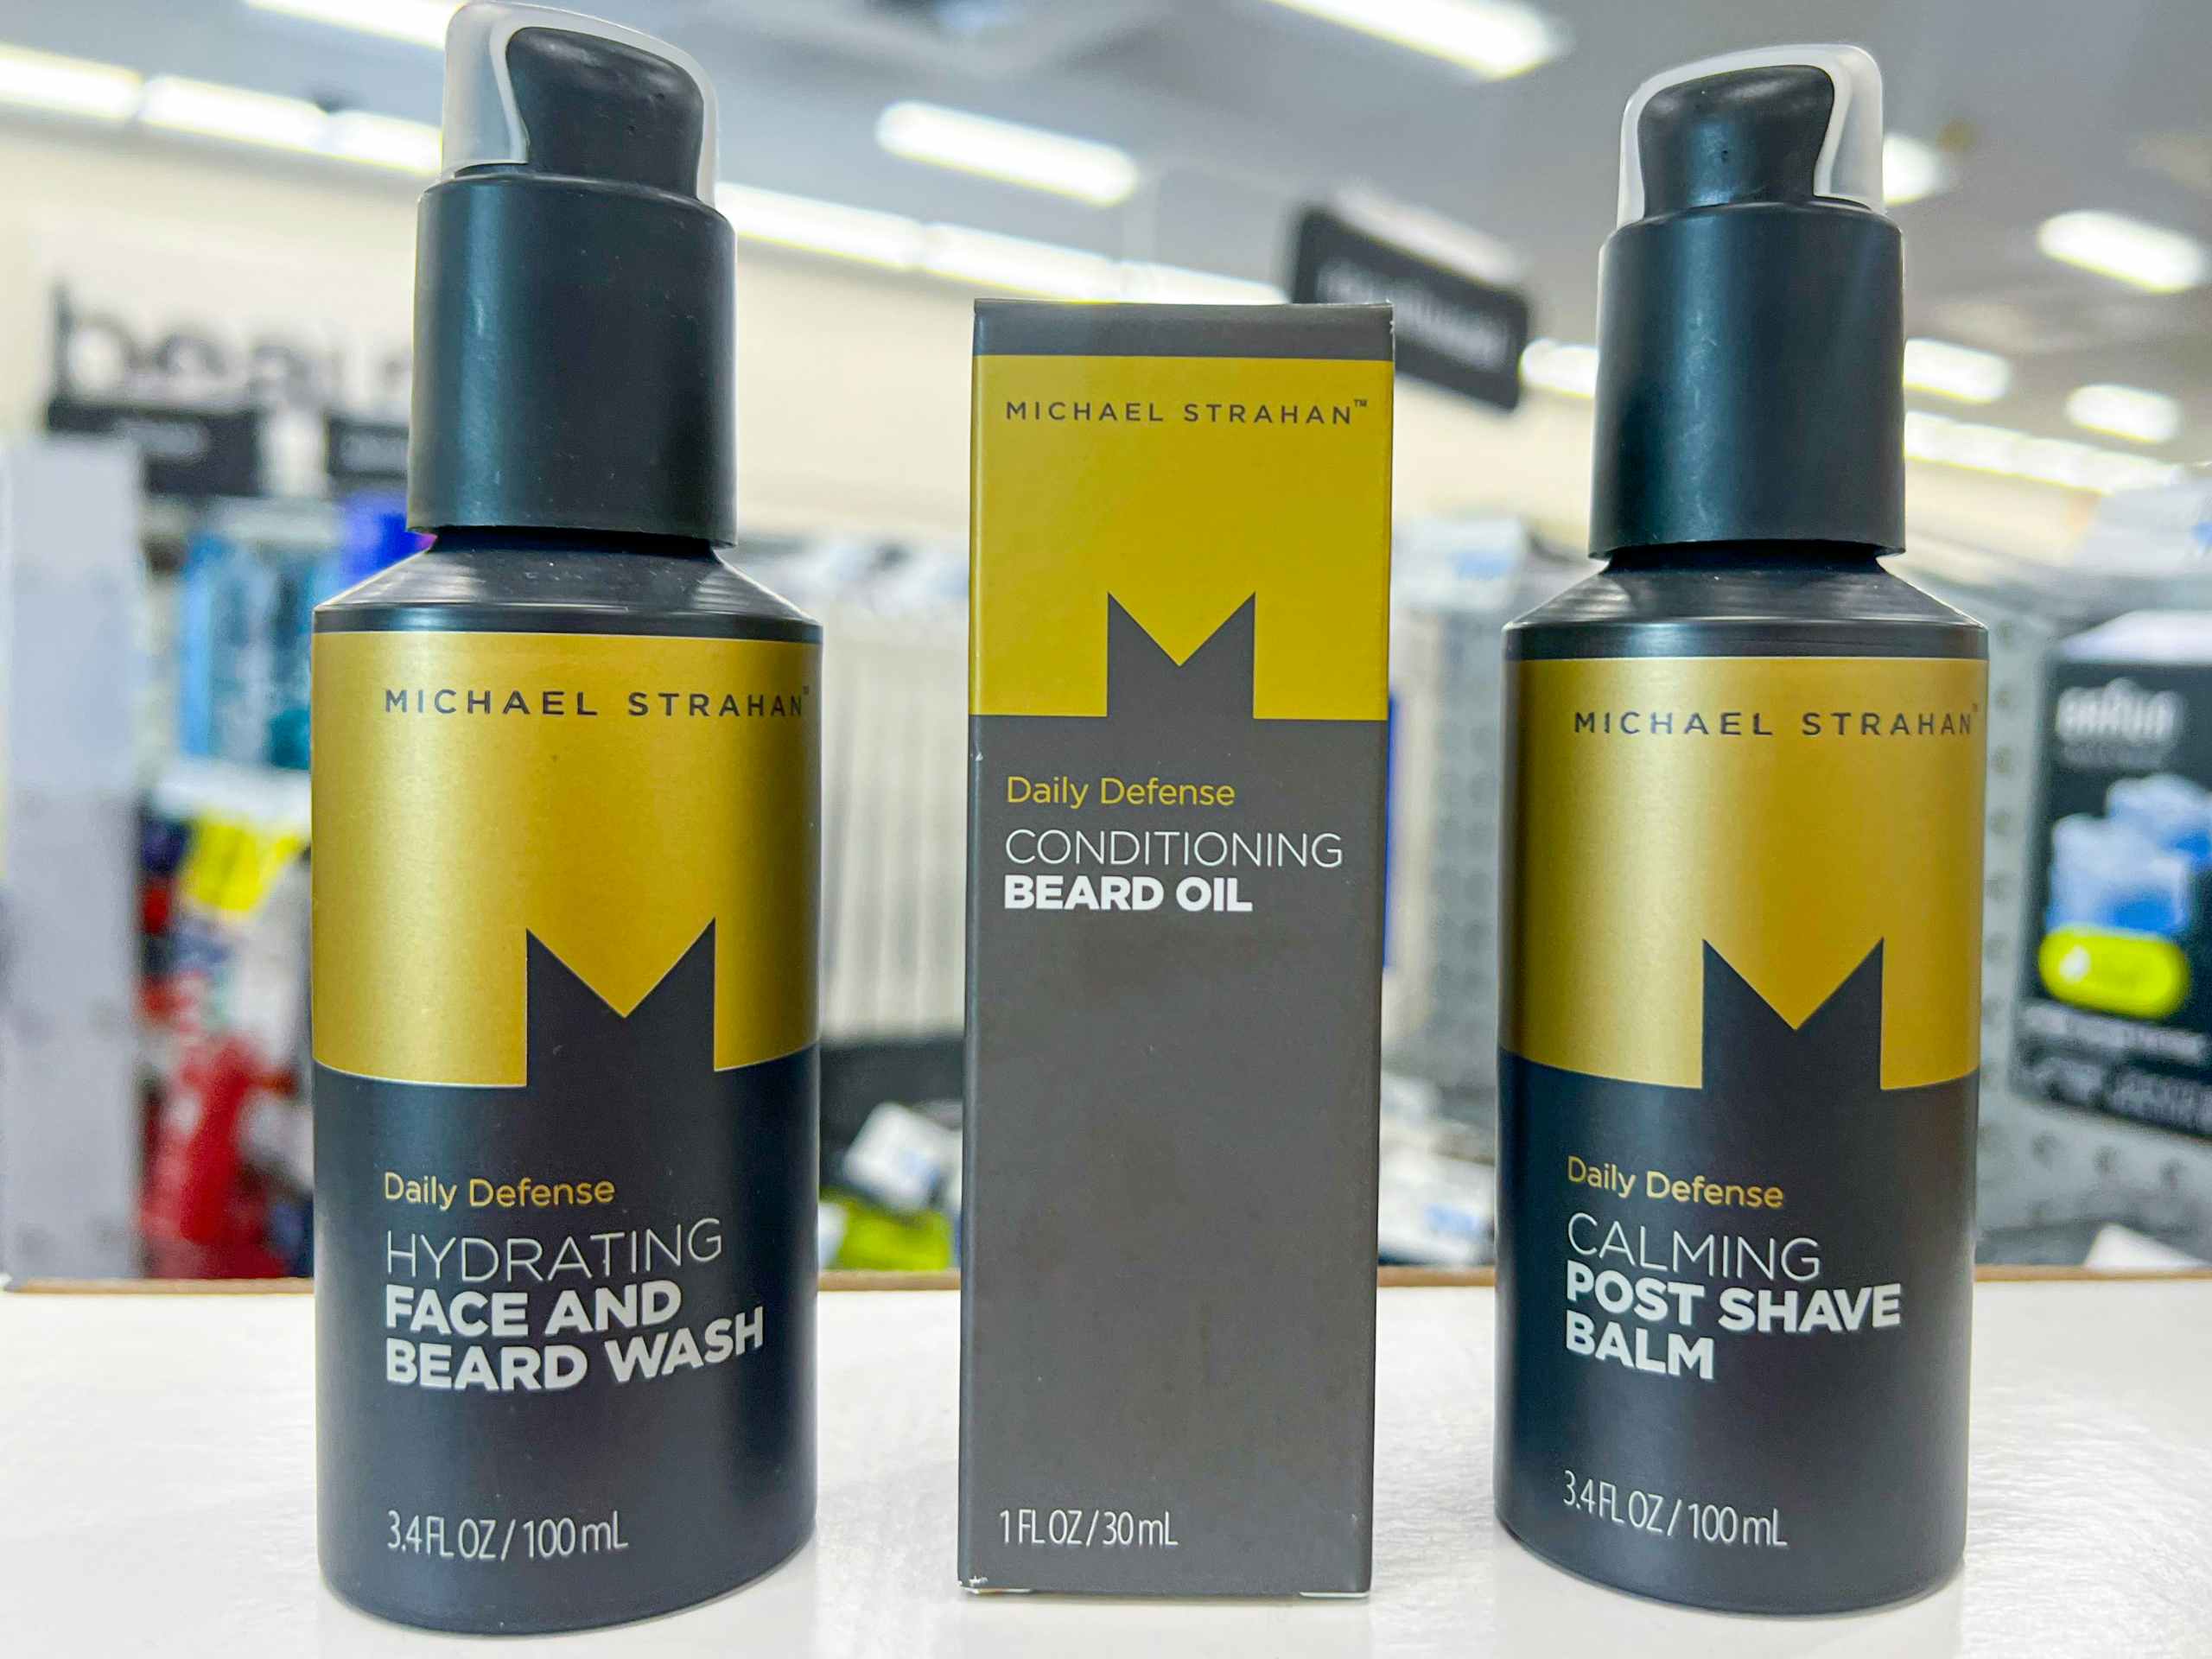 one box of Michael Strahan beard oil, one bottle of face and beard wash, and one bottle of post shave balm